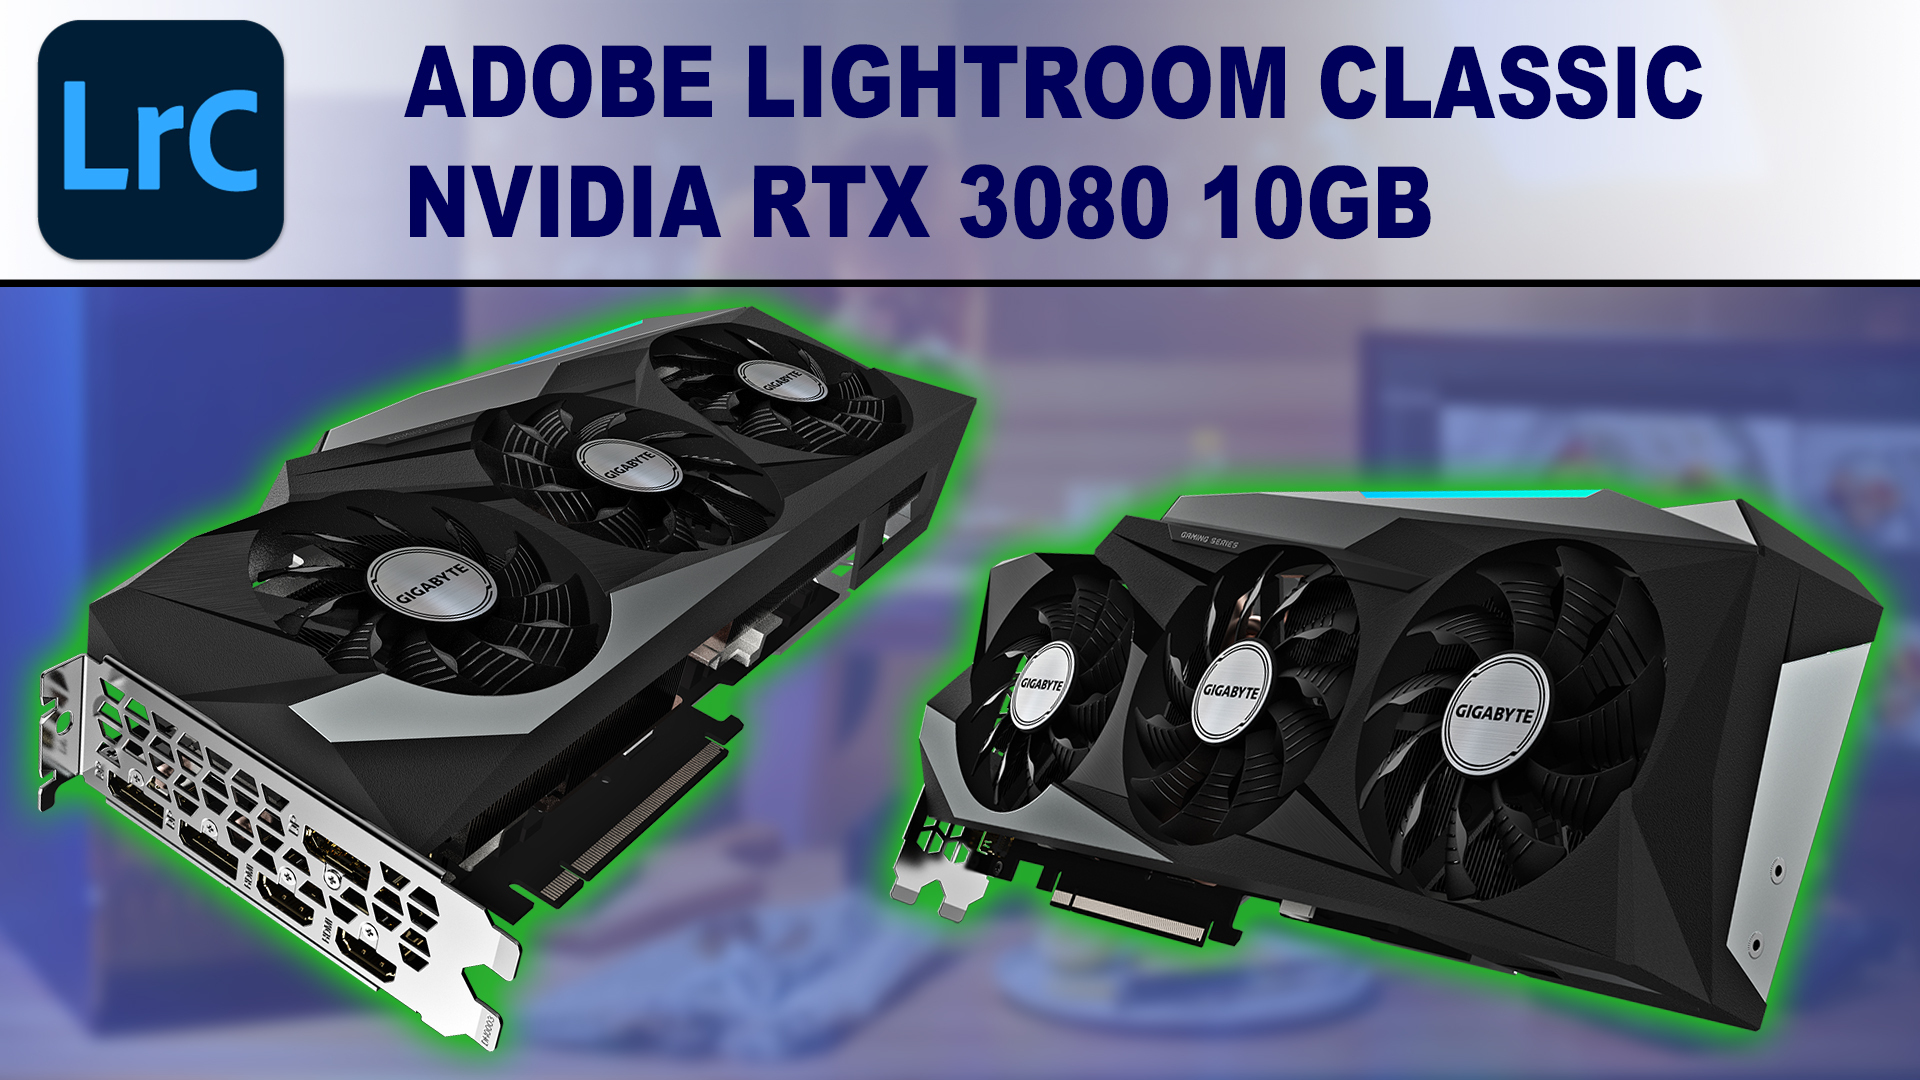 Lightroom Classic GPU Performance Benchmark - NVIDIA GeForce RTX 3080 10GB